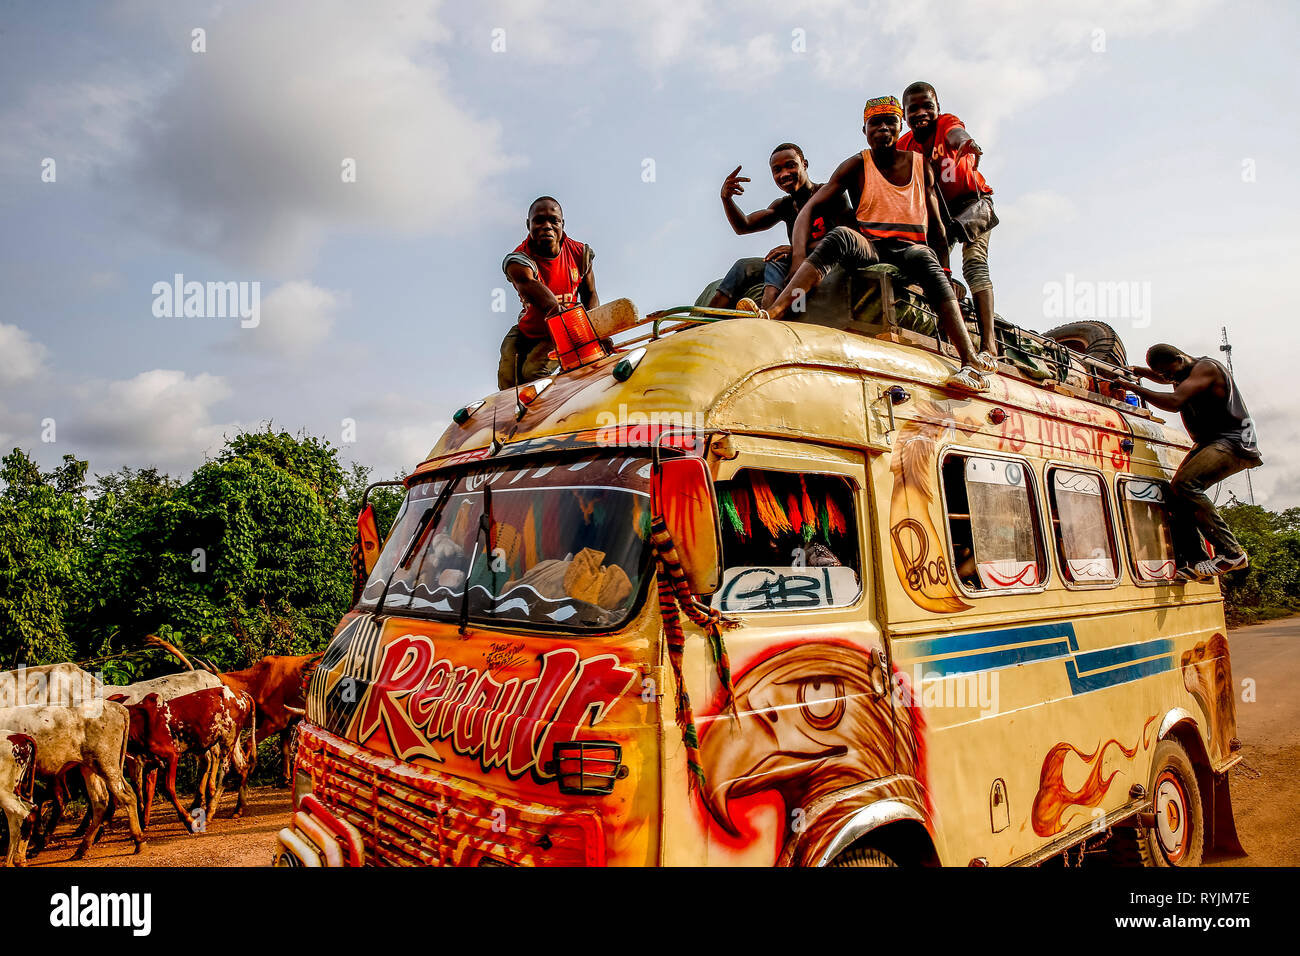 Cattle and public transport bus near Fresco, Ivory Coast. Stock Photo